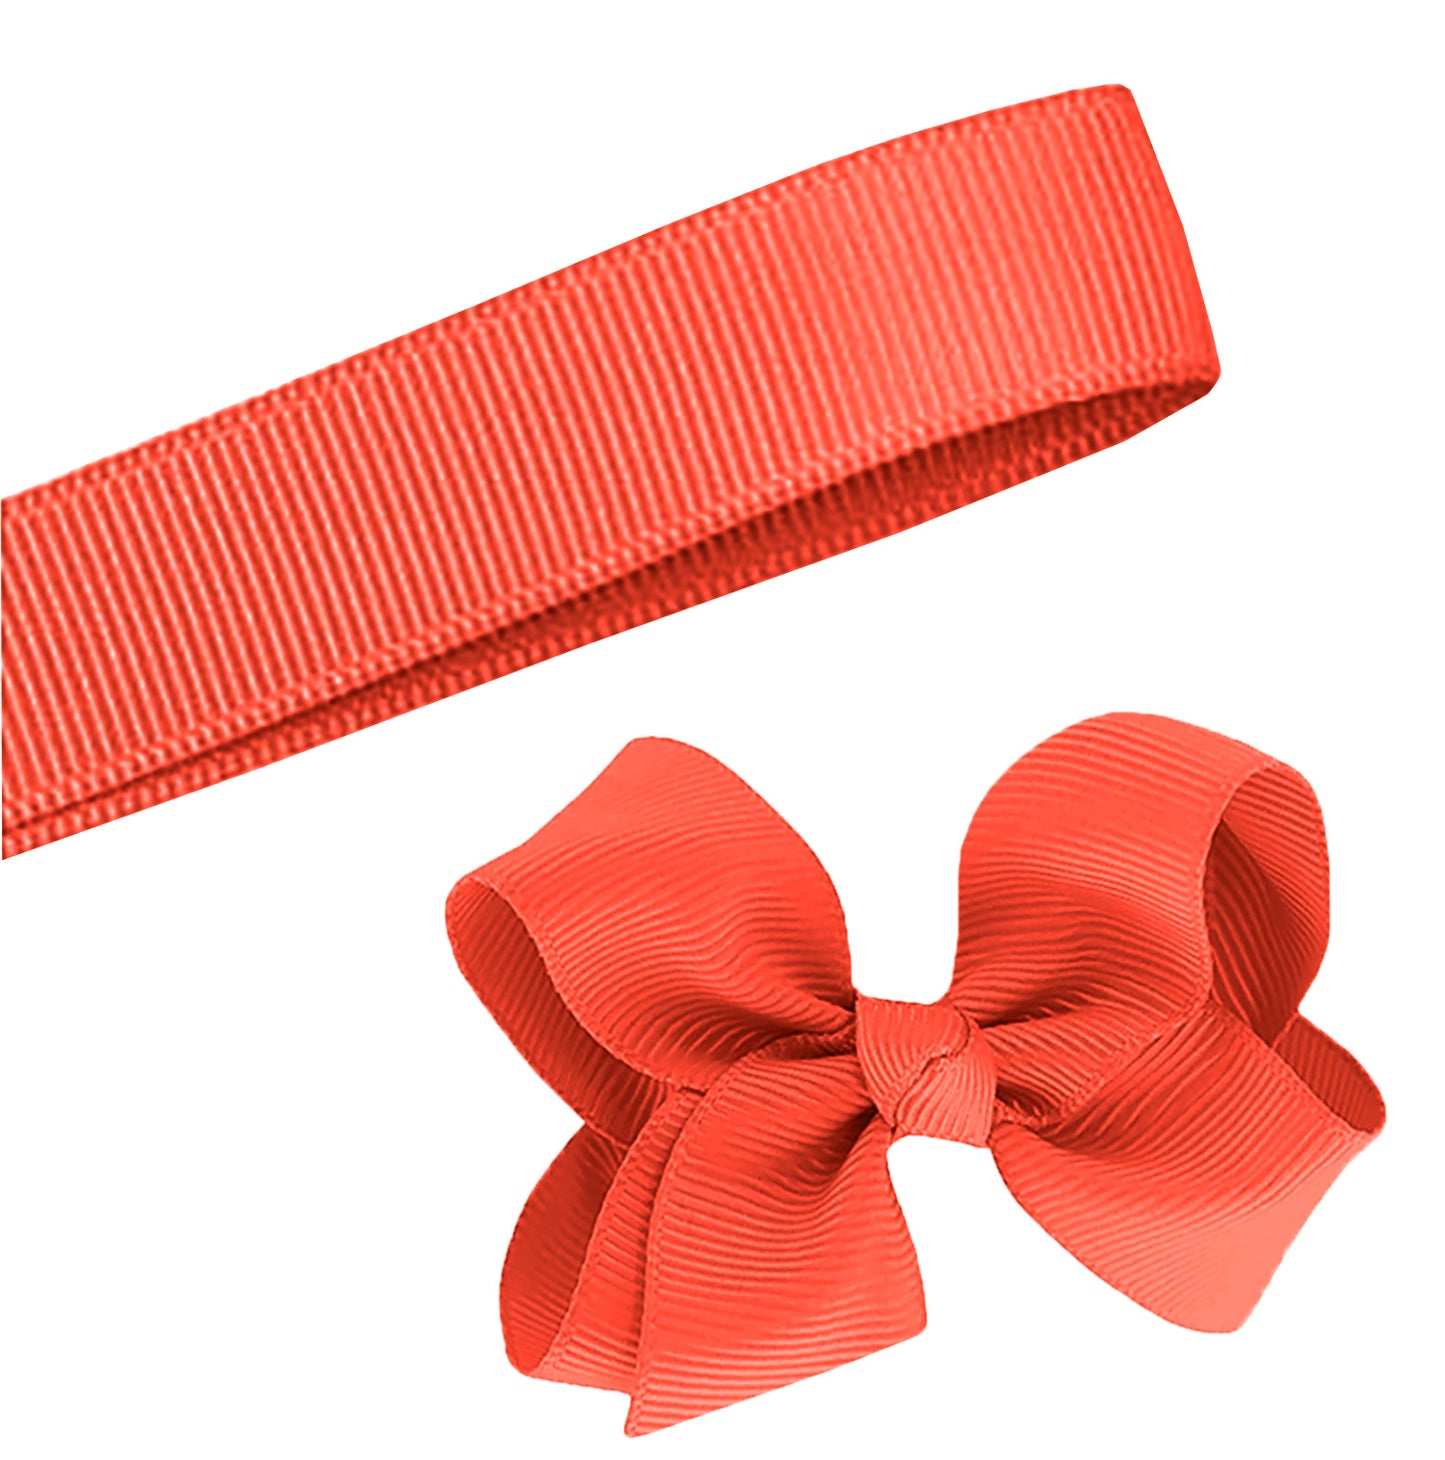 5 Yards Solid Rustic Orange Grosgrain Ribbon Yardage DIY Crafts Bows USA